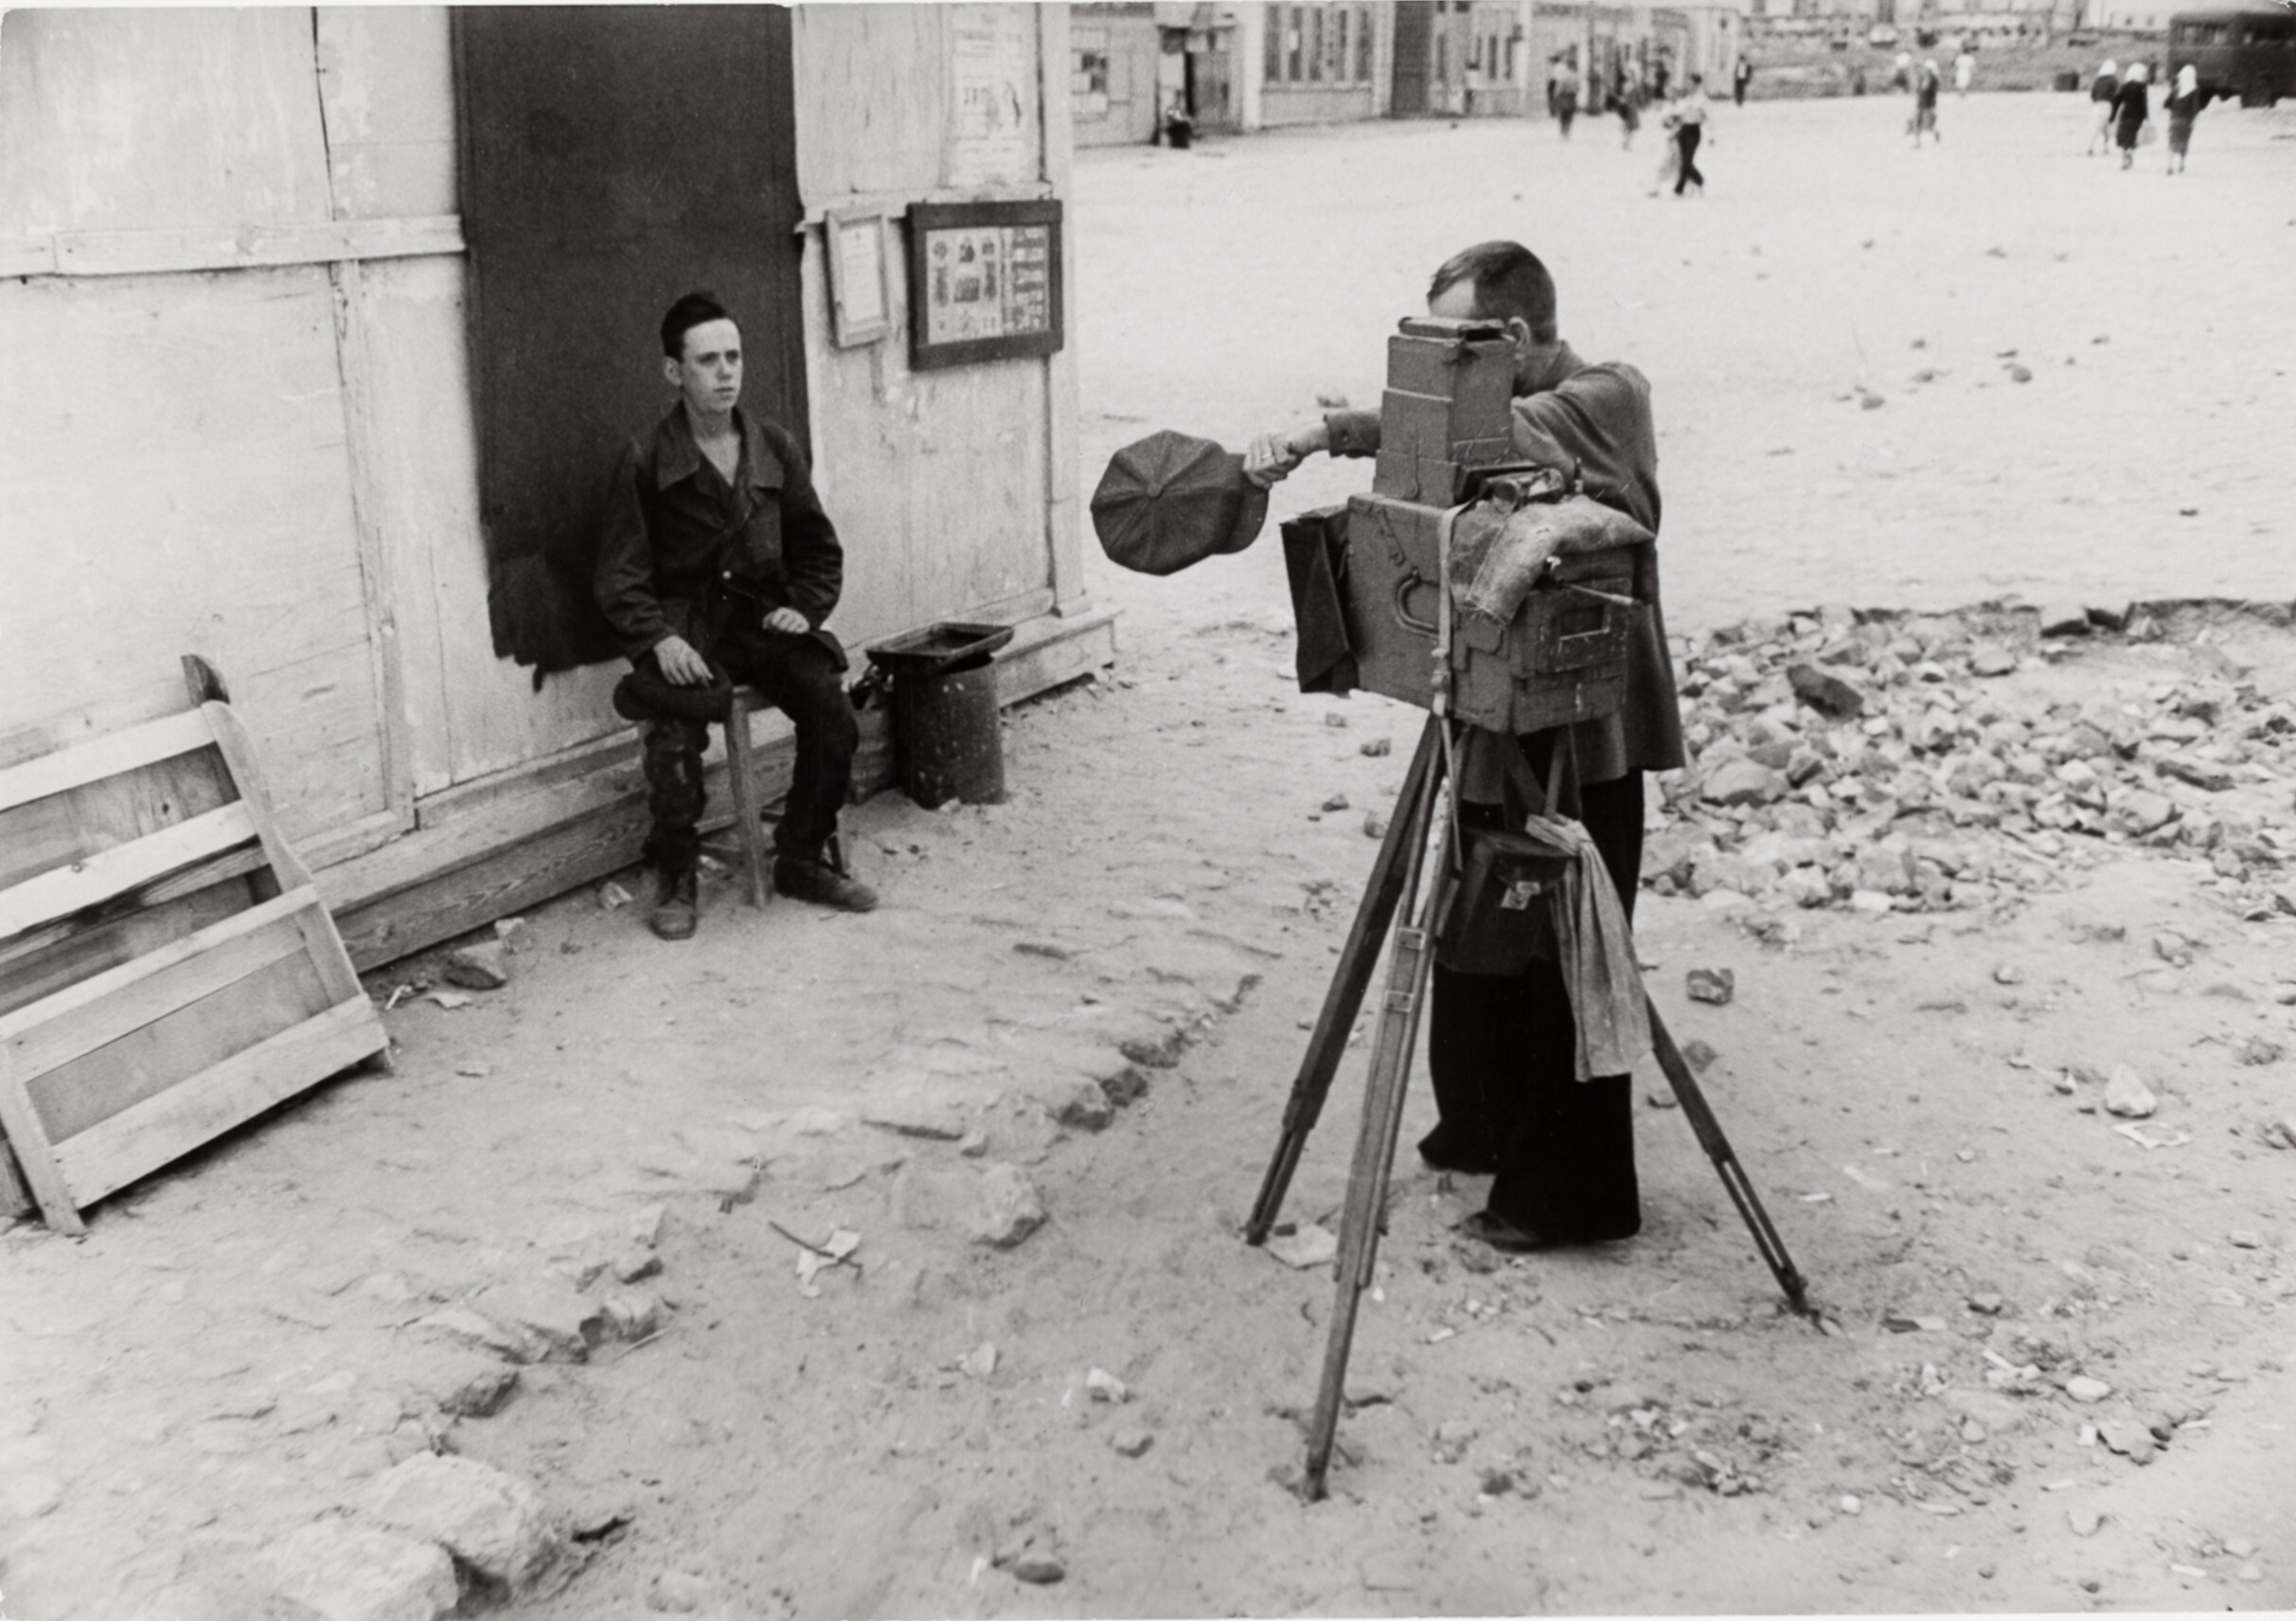 Фотограф снимает новобранца, Сталинград, СССР, 1947 год. Фотограф Роберт Капа